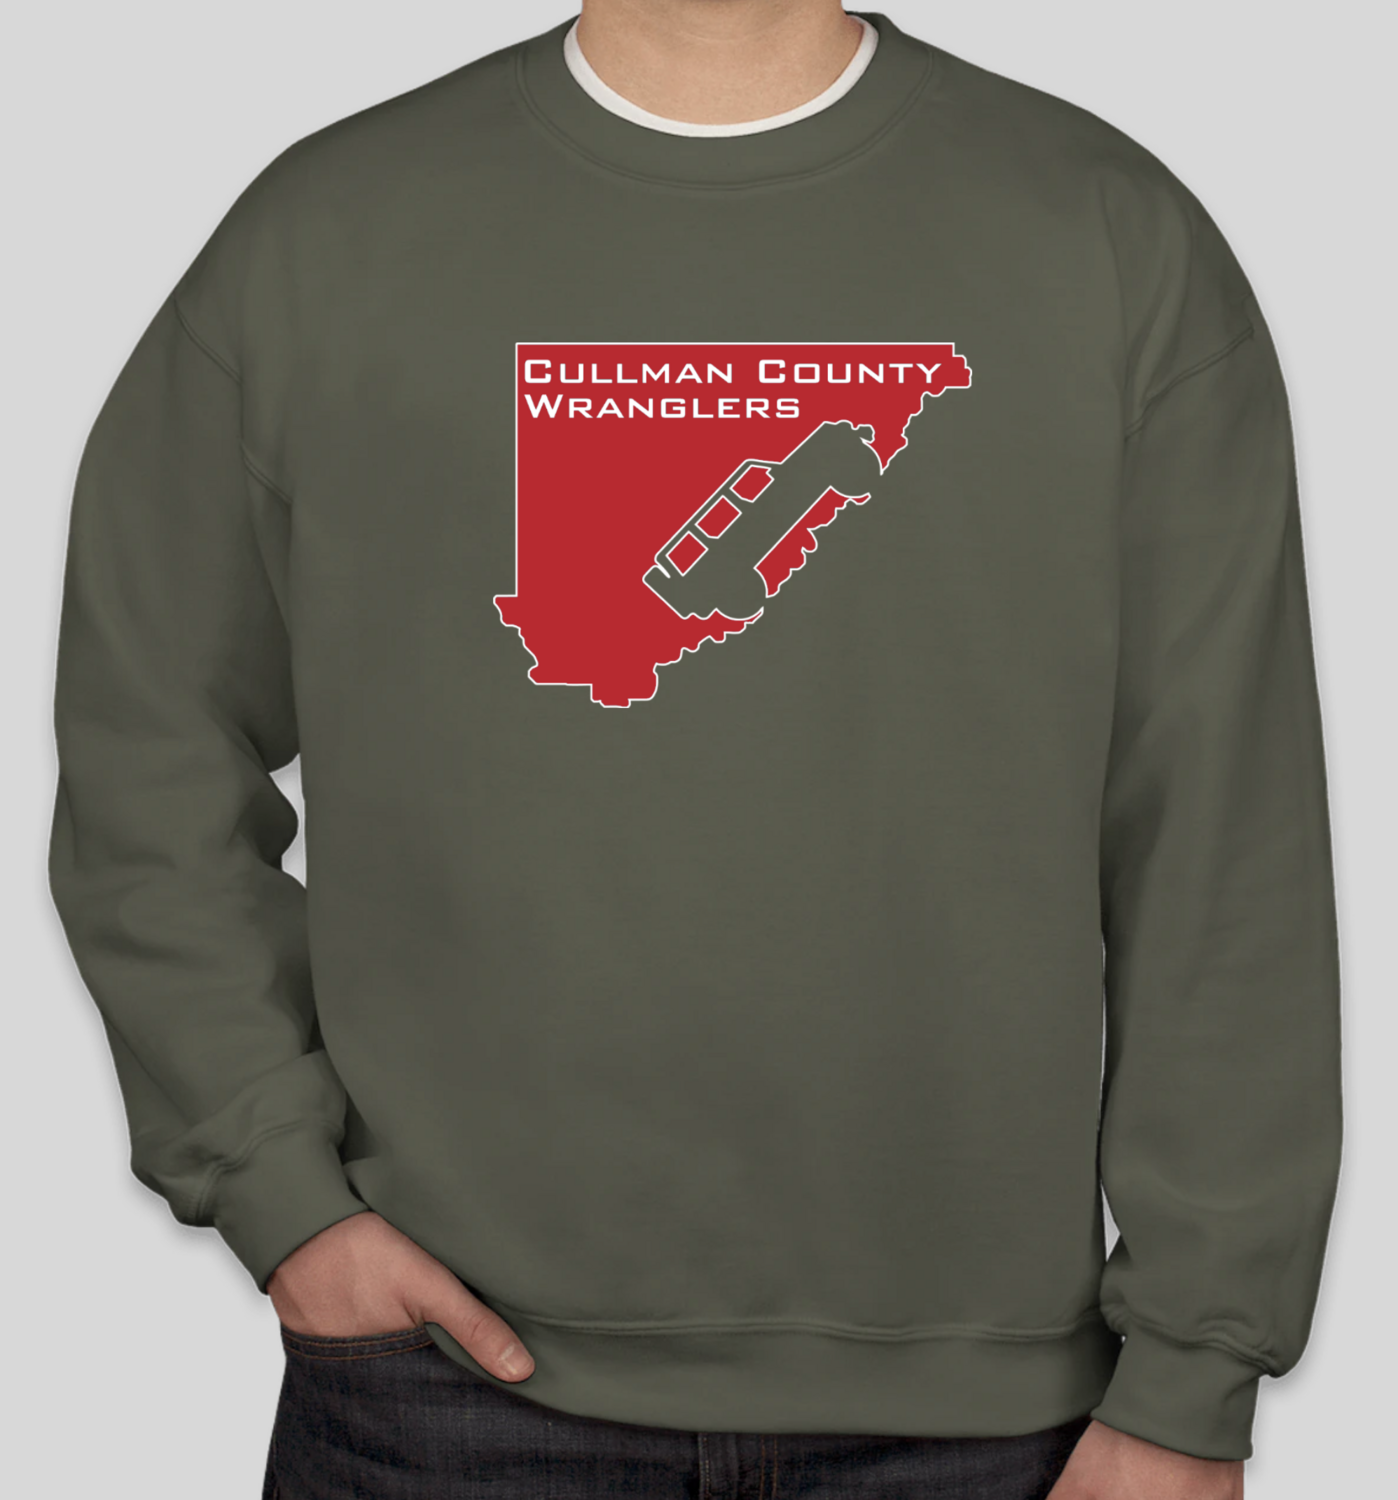 Cullman County Wranglers Crewneck Sweatshirt - Red & Military Green